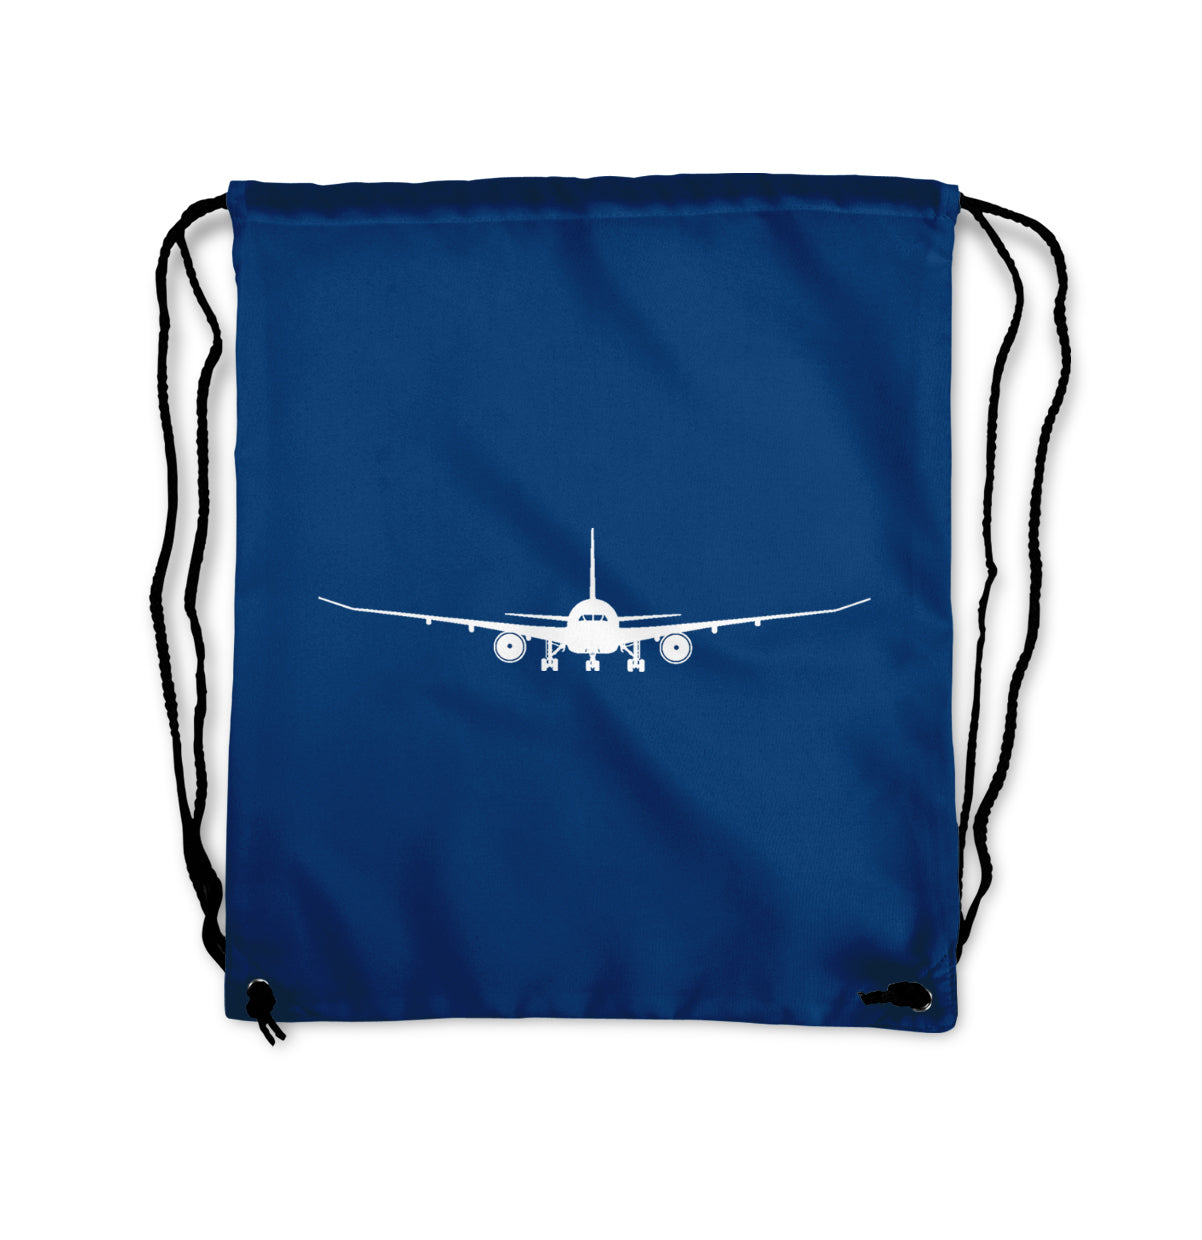 Boeing 787 Silhouette Designed Drawstring Bags